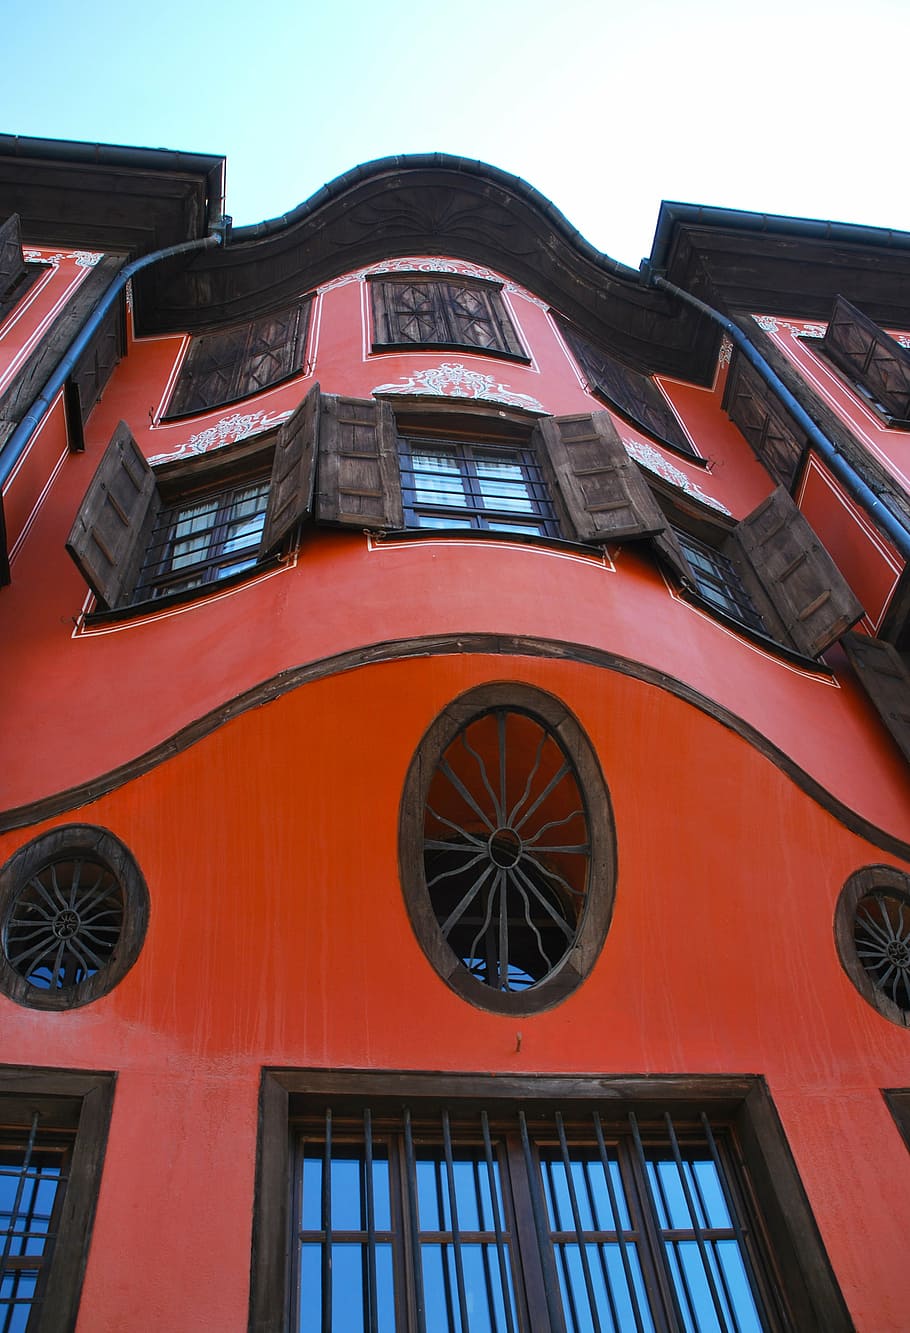 plovdiv, old, building, house, museum, red, orange, sky, rural